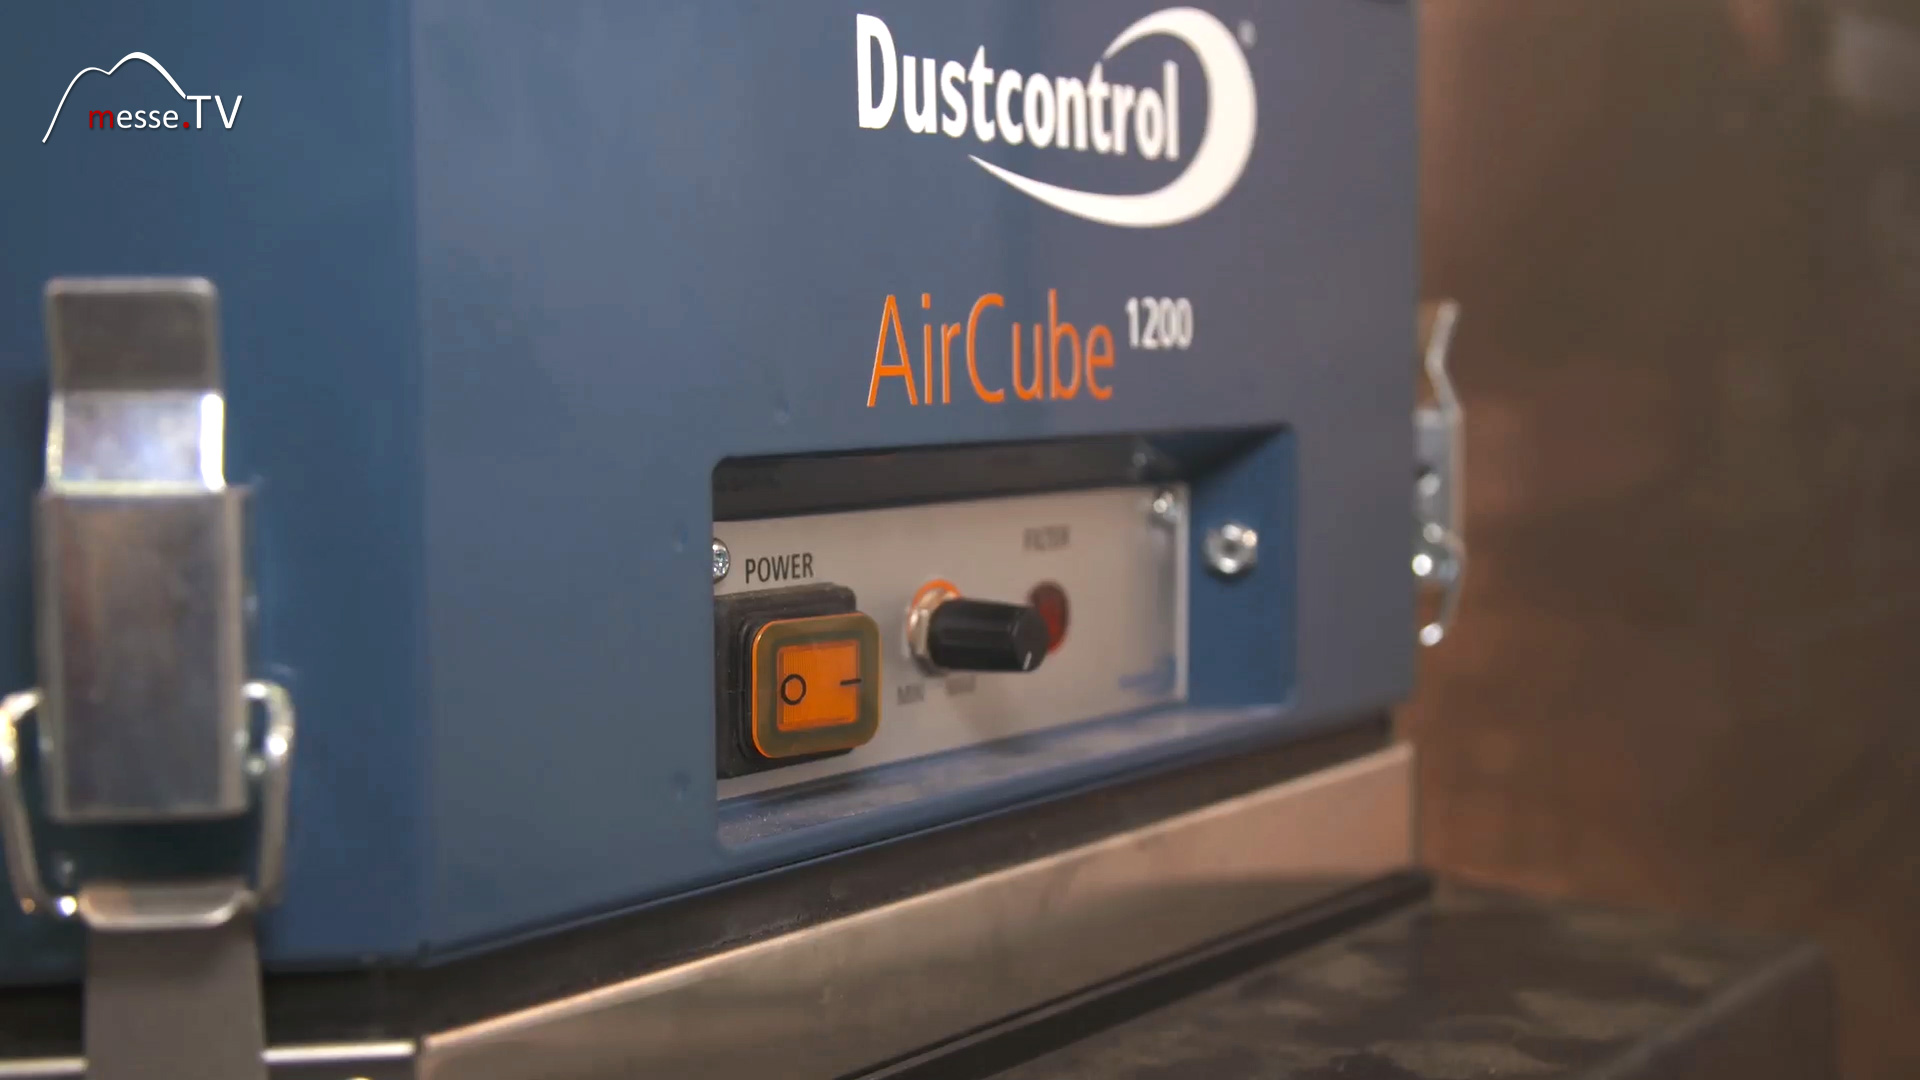 AirCube 1200 Dustcontrol Baustelle staubfrei halten